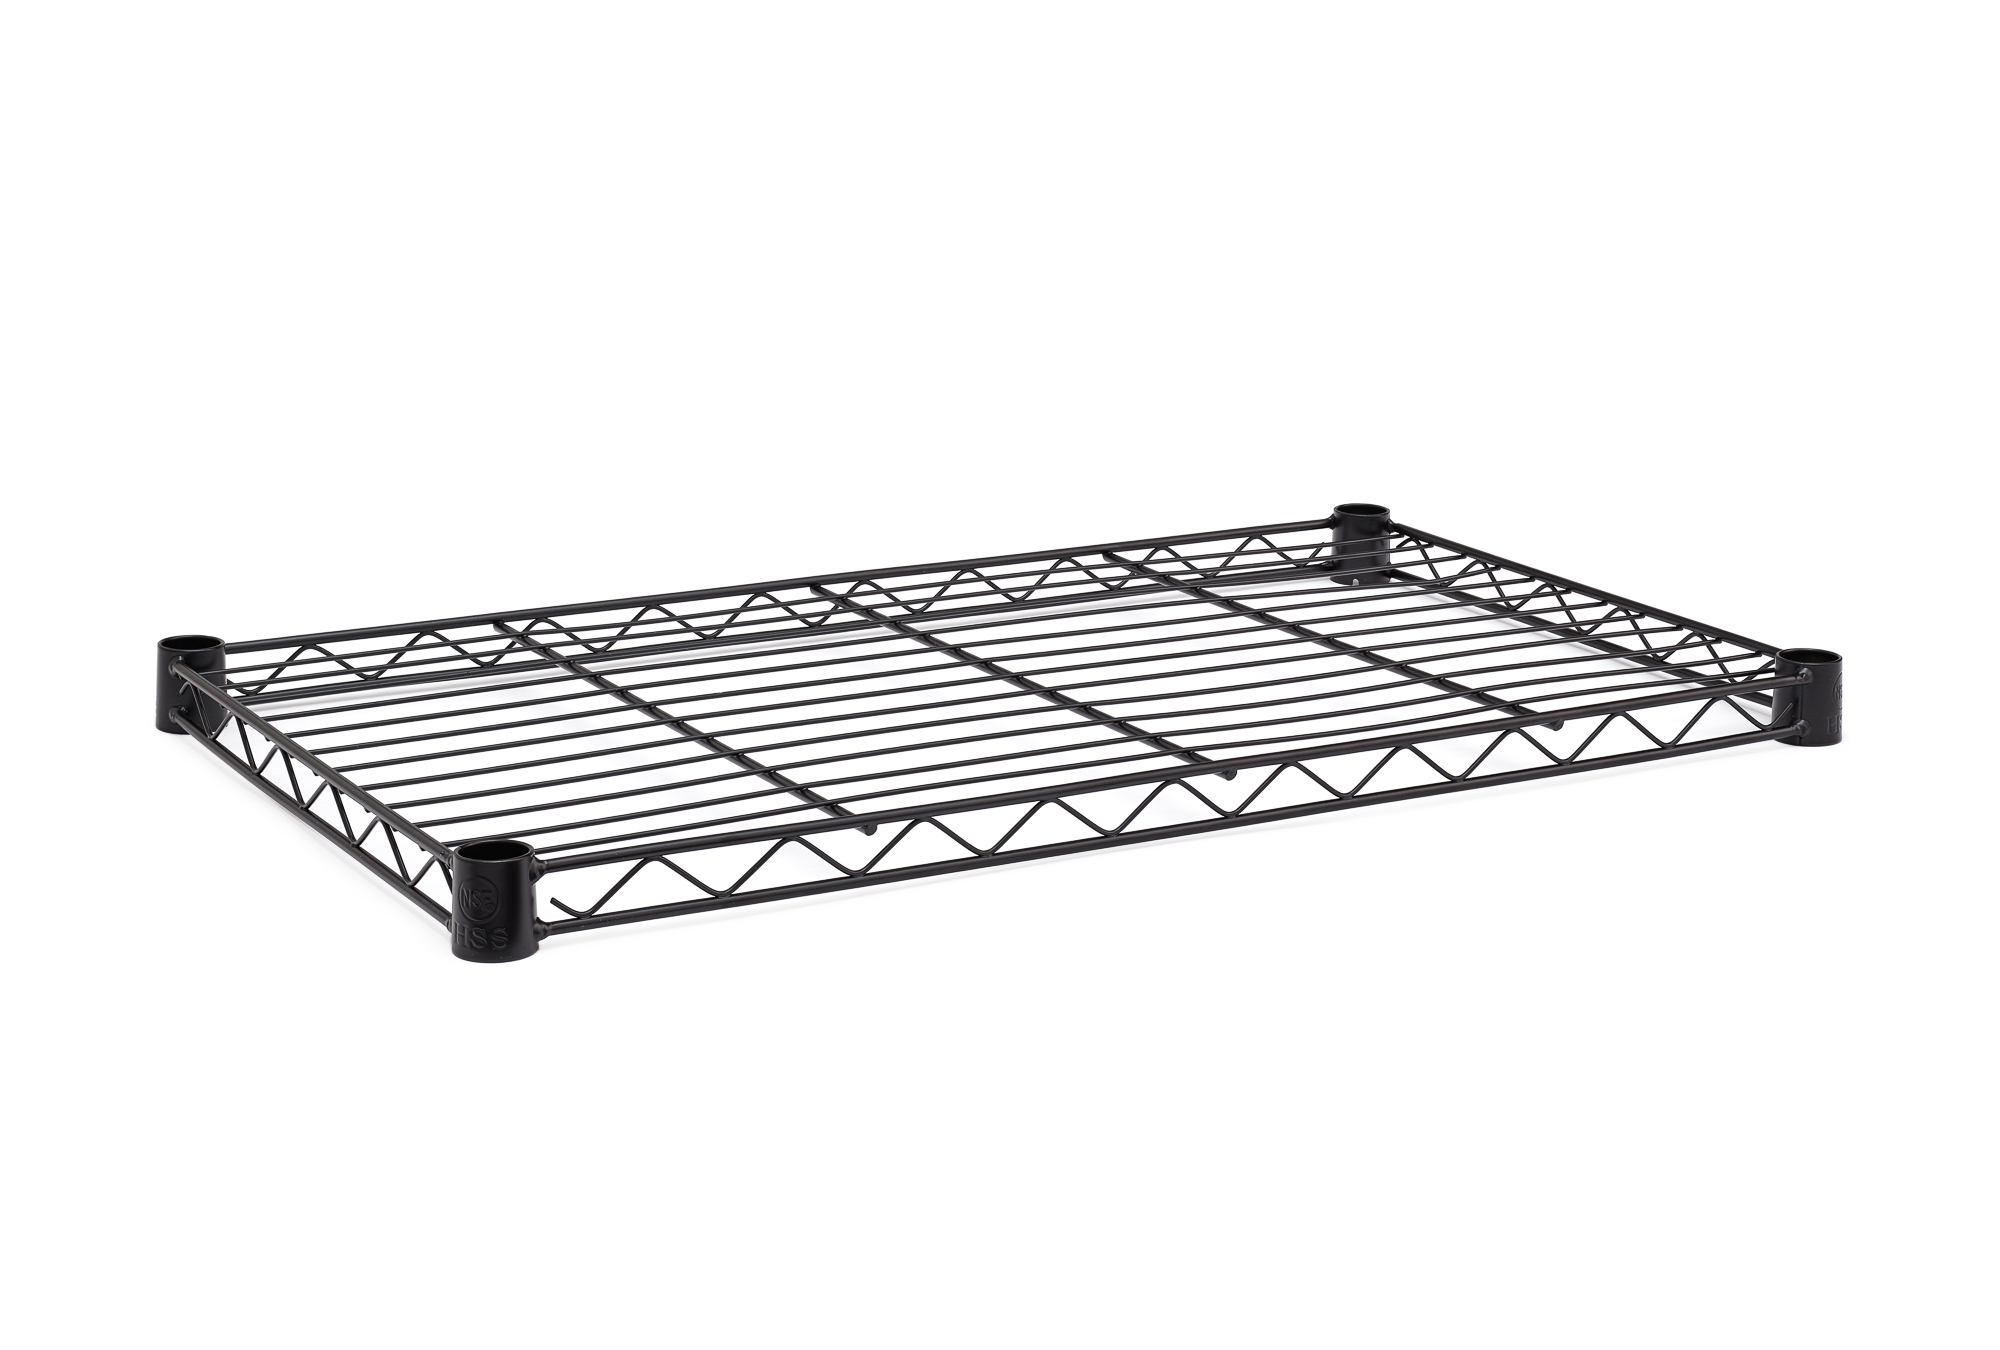 HSS Steel Extra Wire Shelf 13.4"x23.2", Fits 3/4" Pole Diameter, Black, Shelf Capacity 250 lbs - image 1 of 3